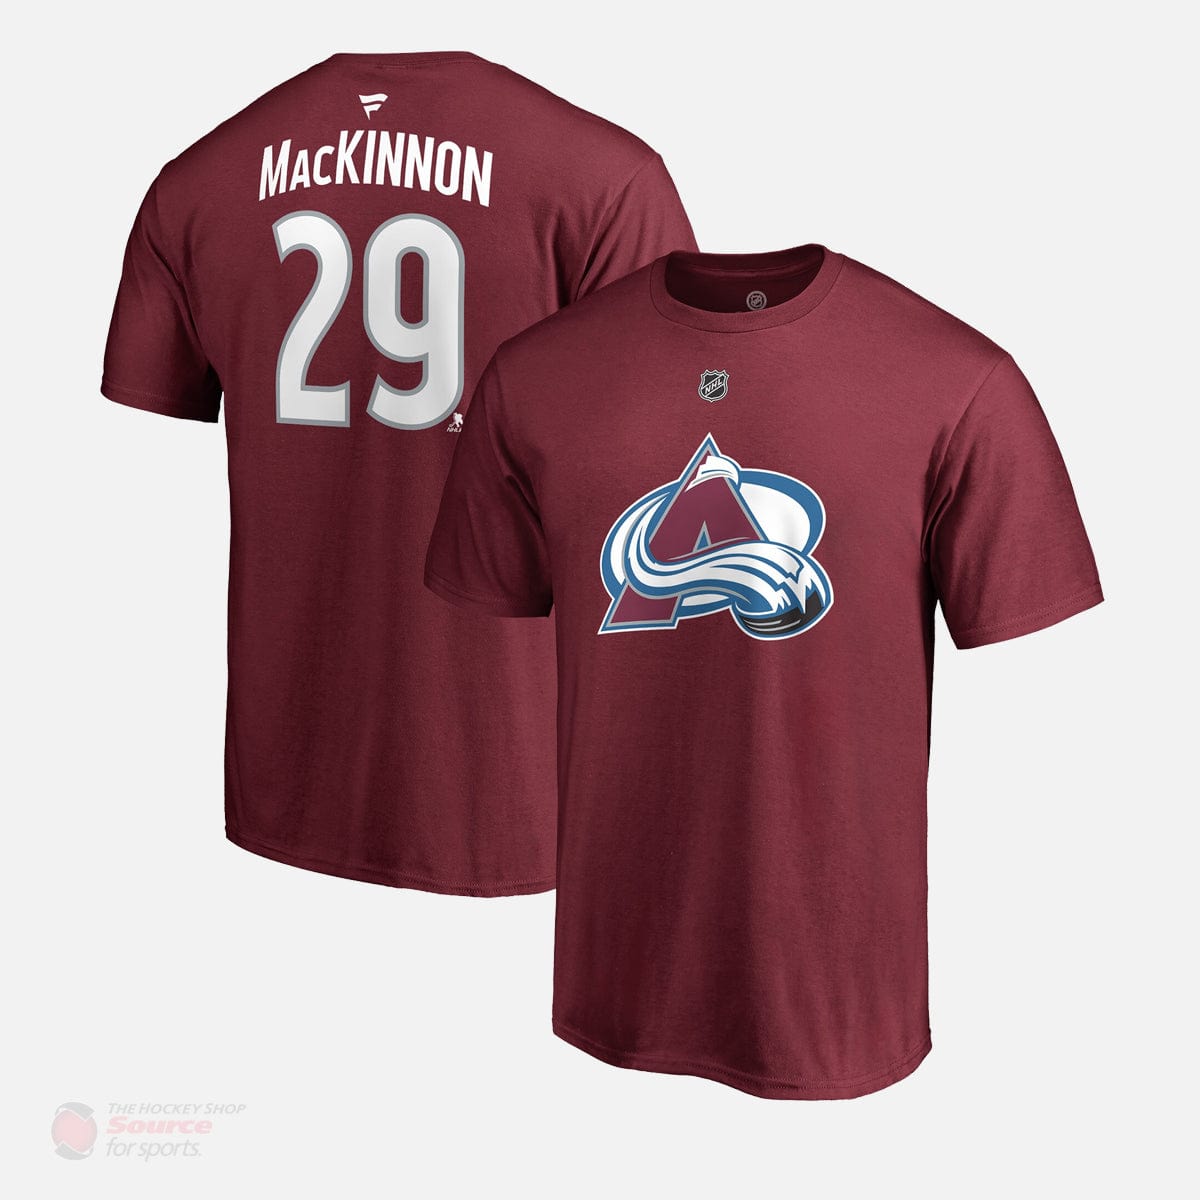 Colorado Avalanche Fanatics Authentic Name & Number Mens Shirt - Nathan MacKinnon